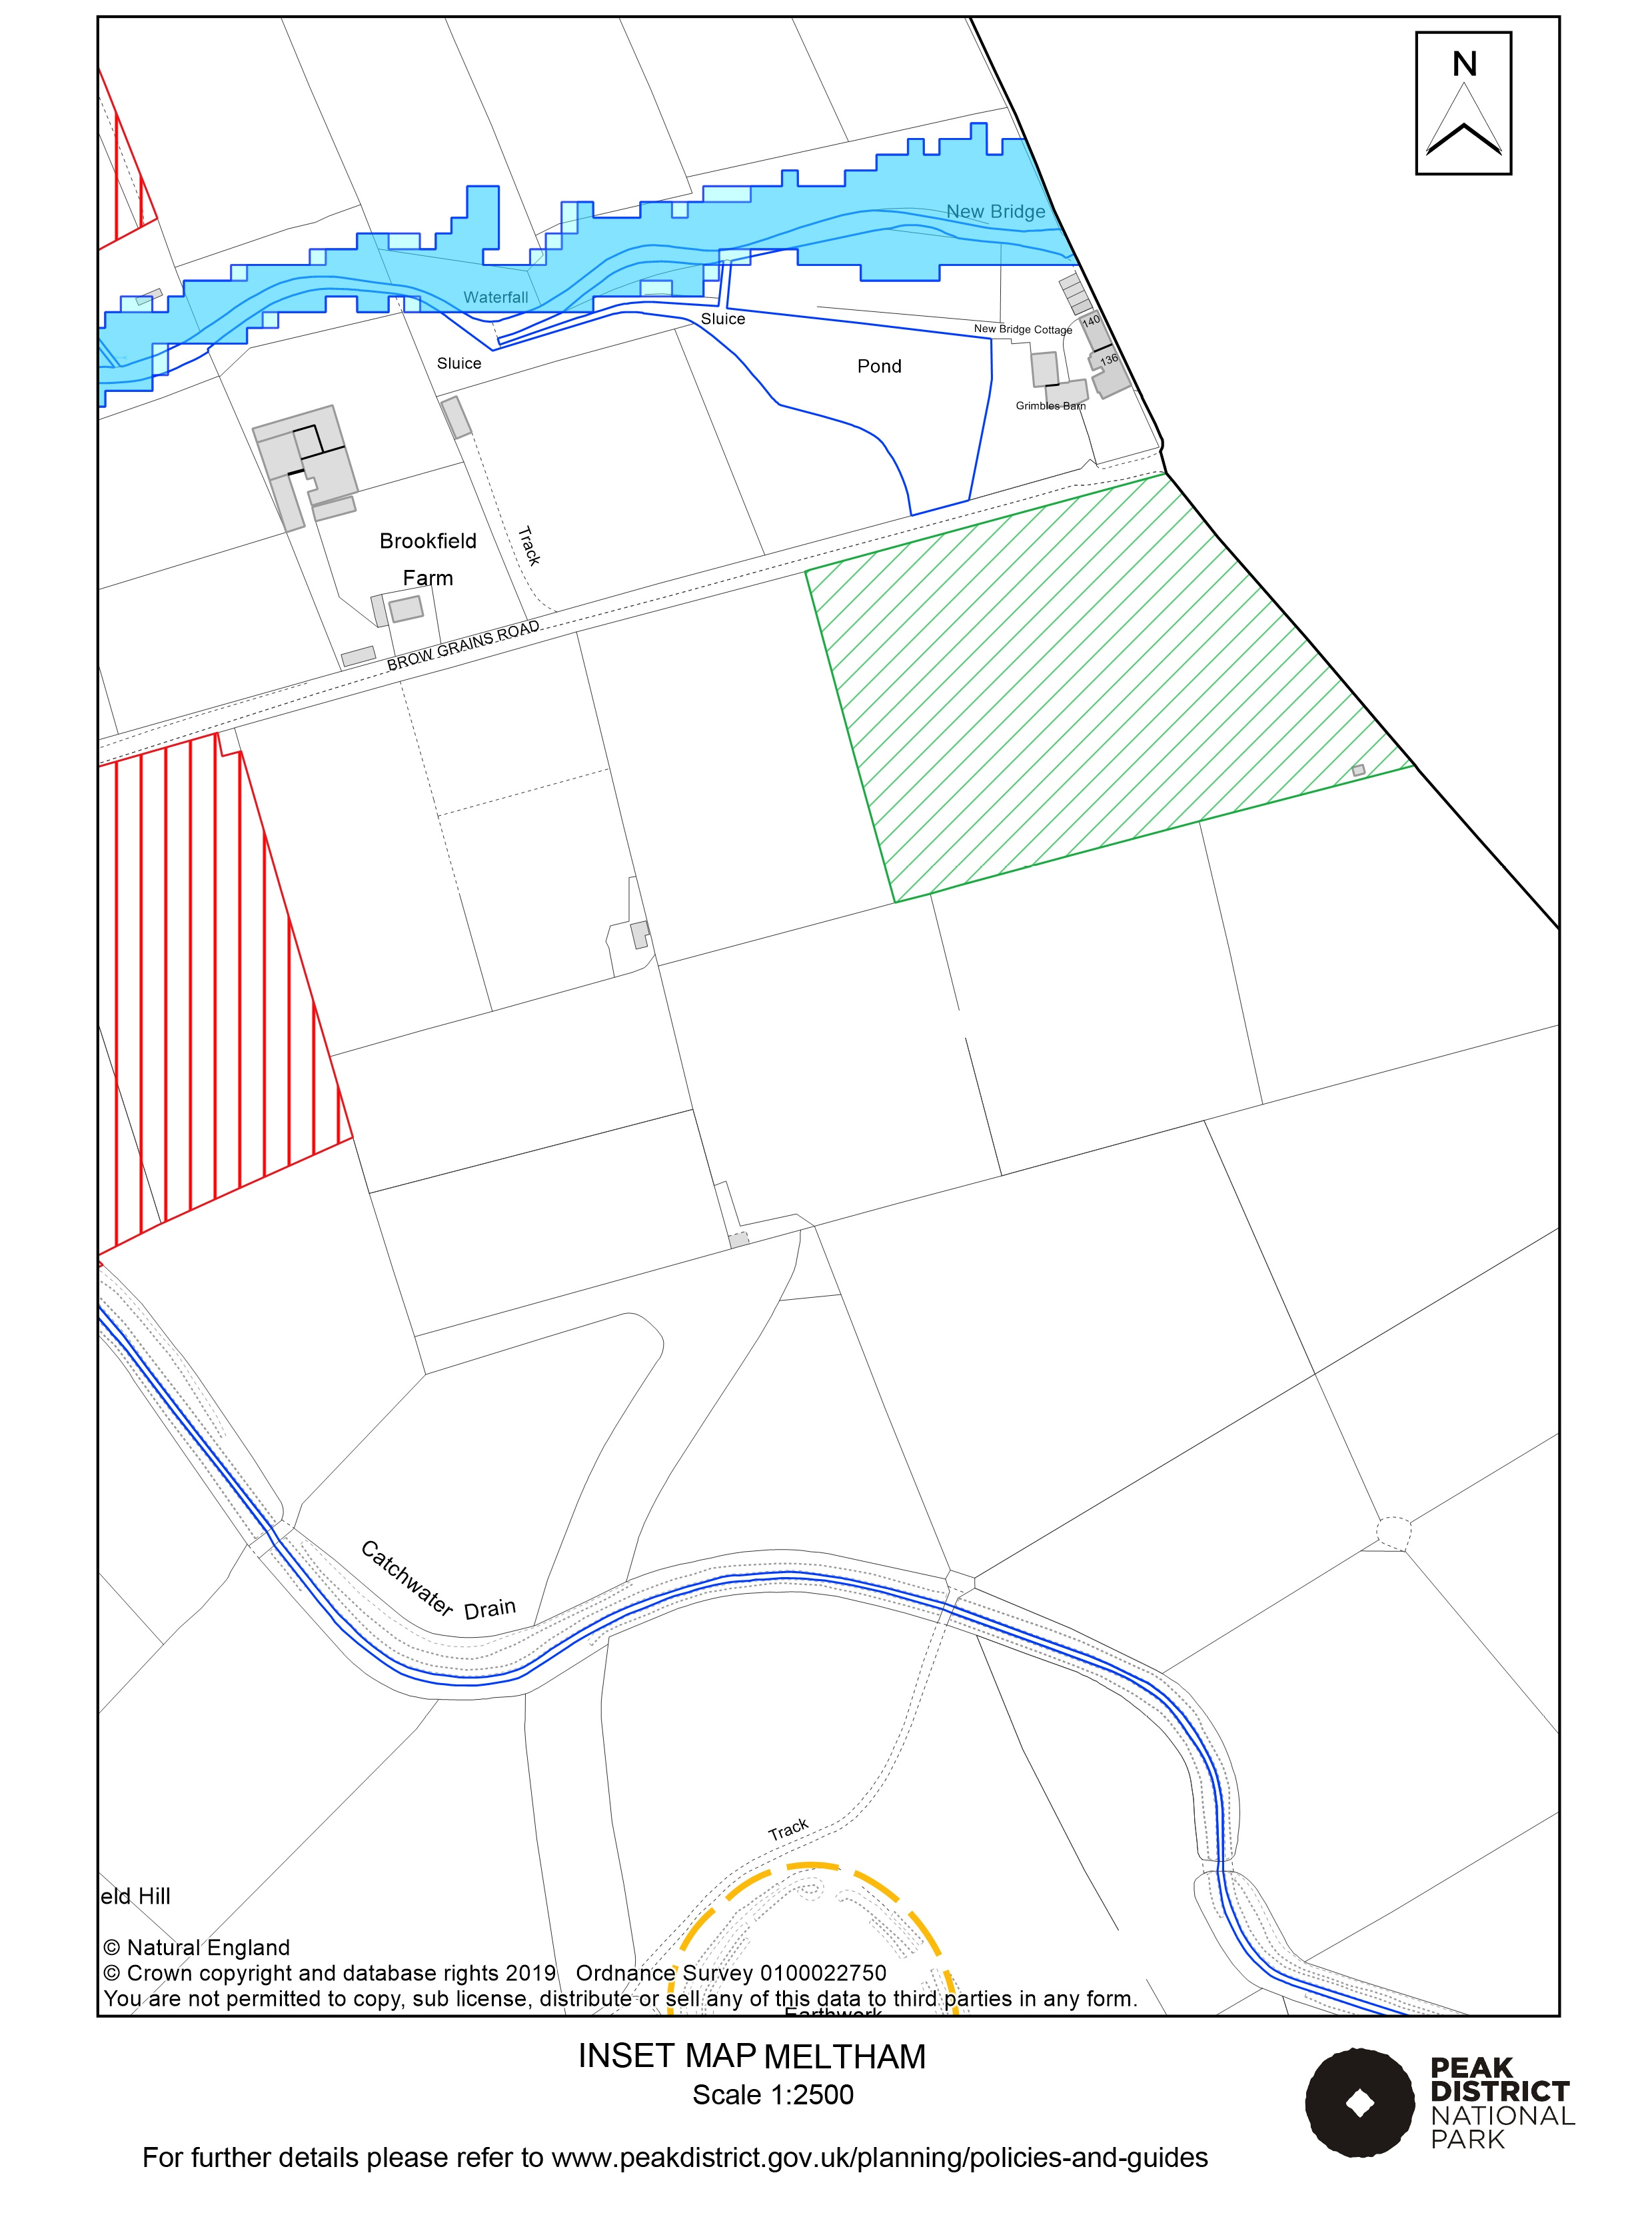 Local Plan Proposals Map: Meltham